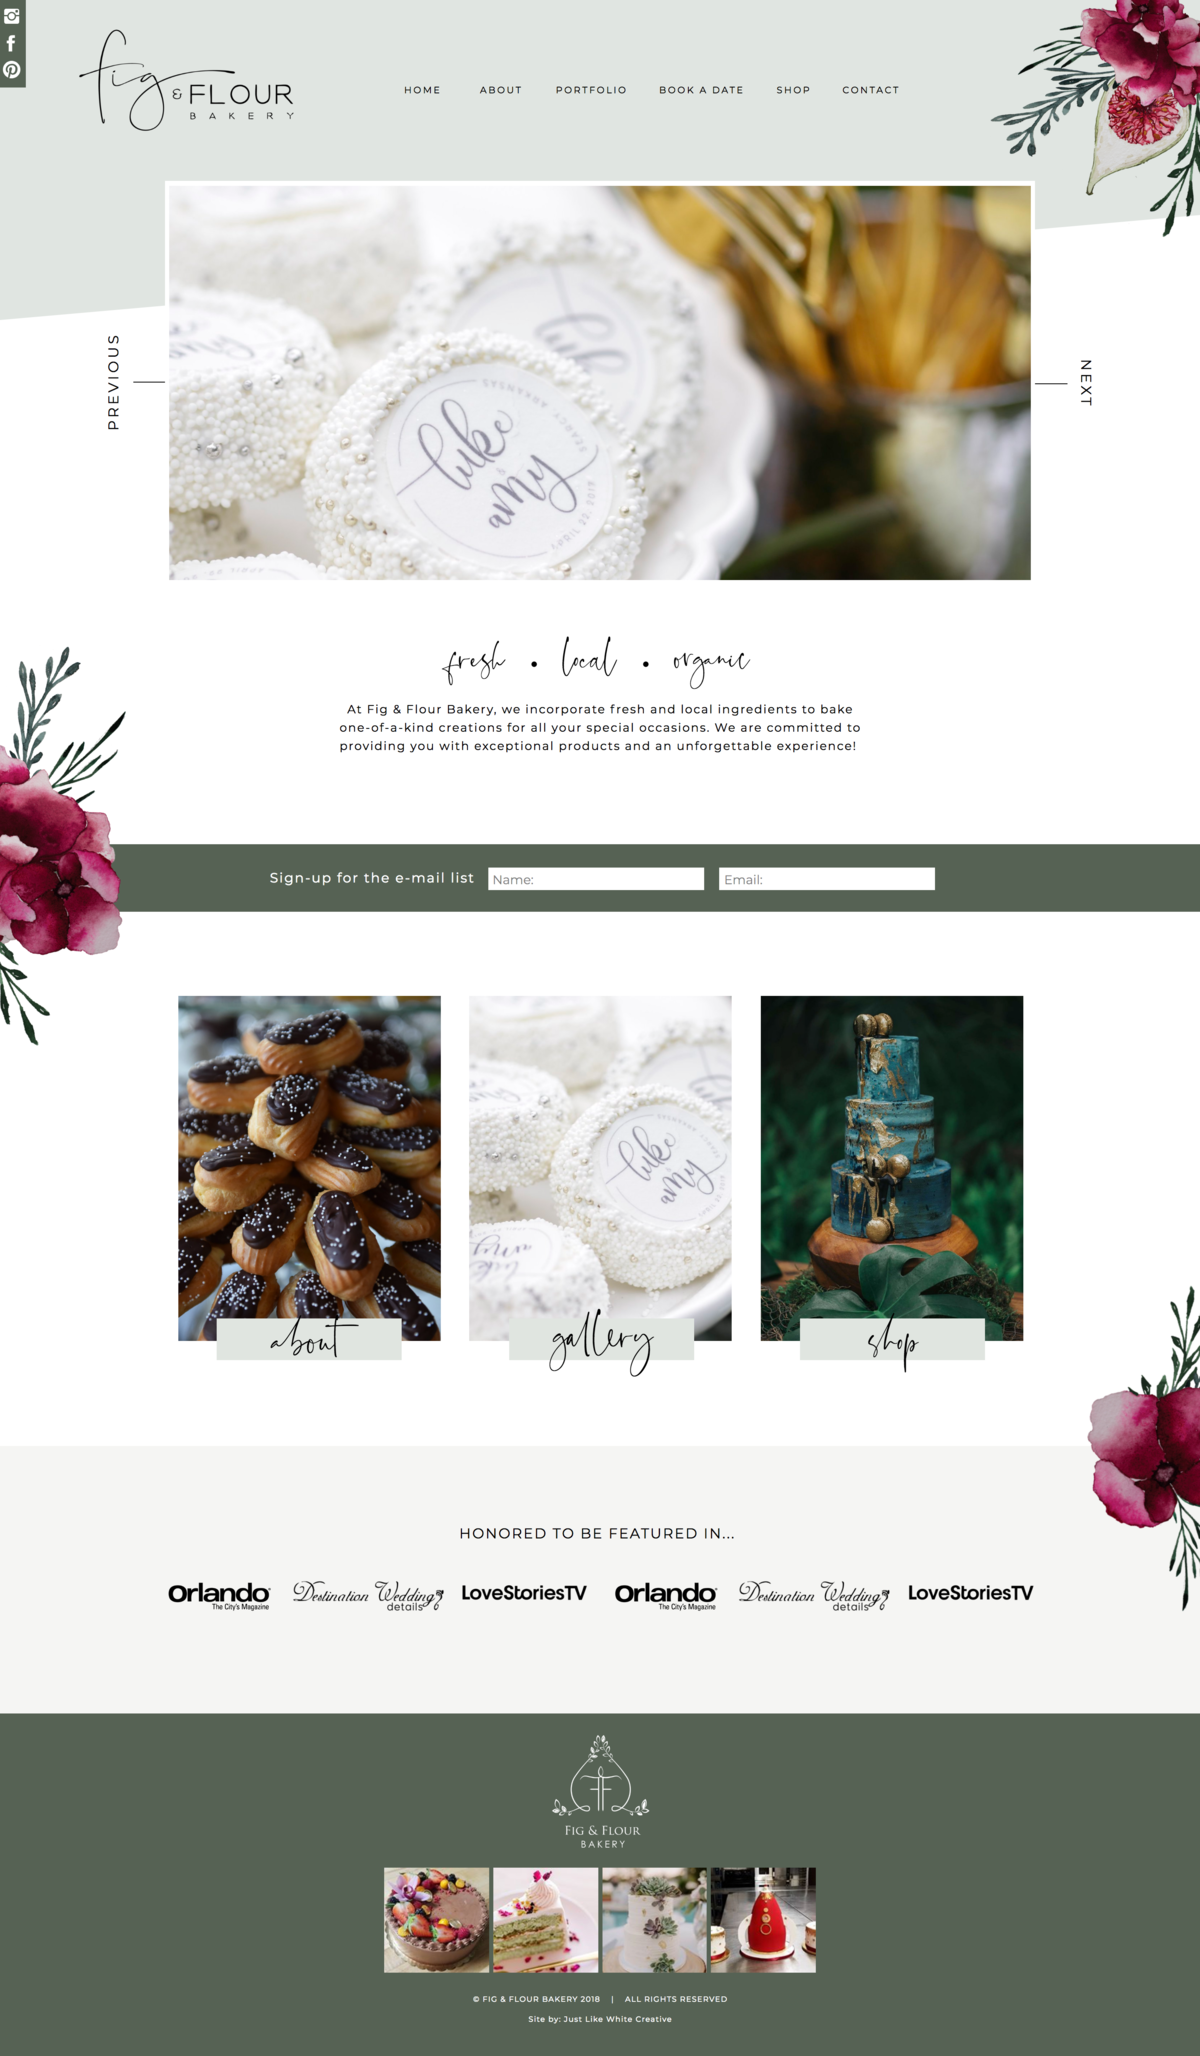 Website design for baked goods - Fig & flour bakery design by Tribble Design Co.